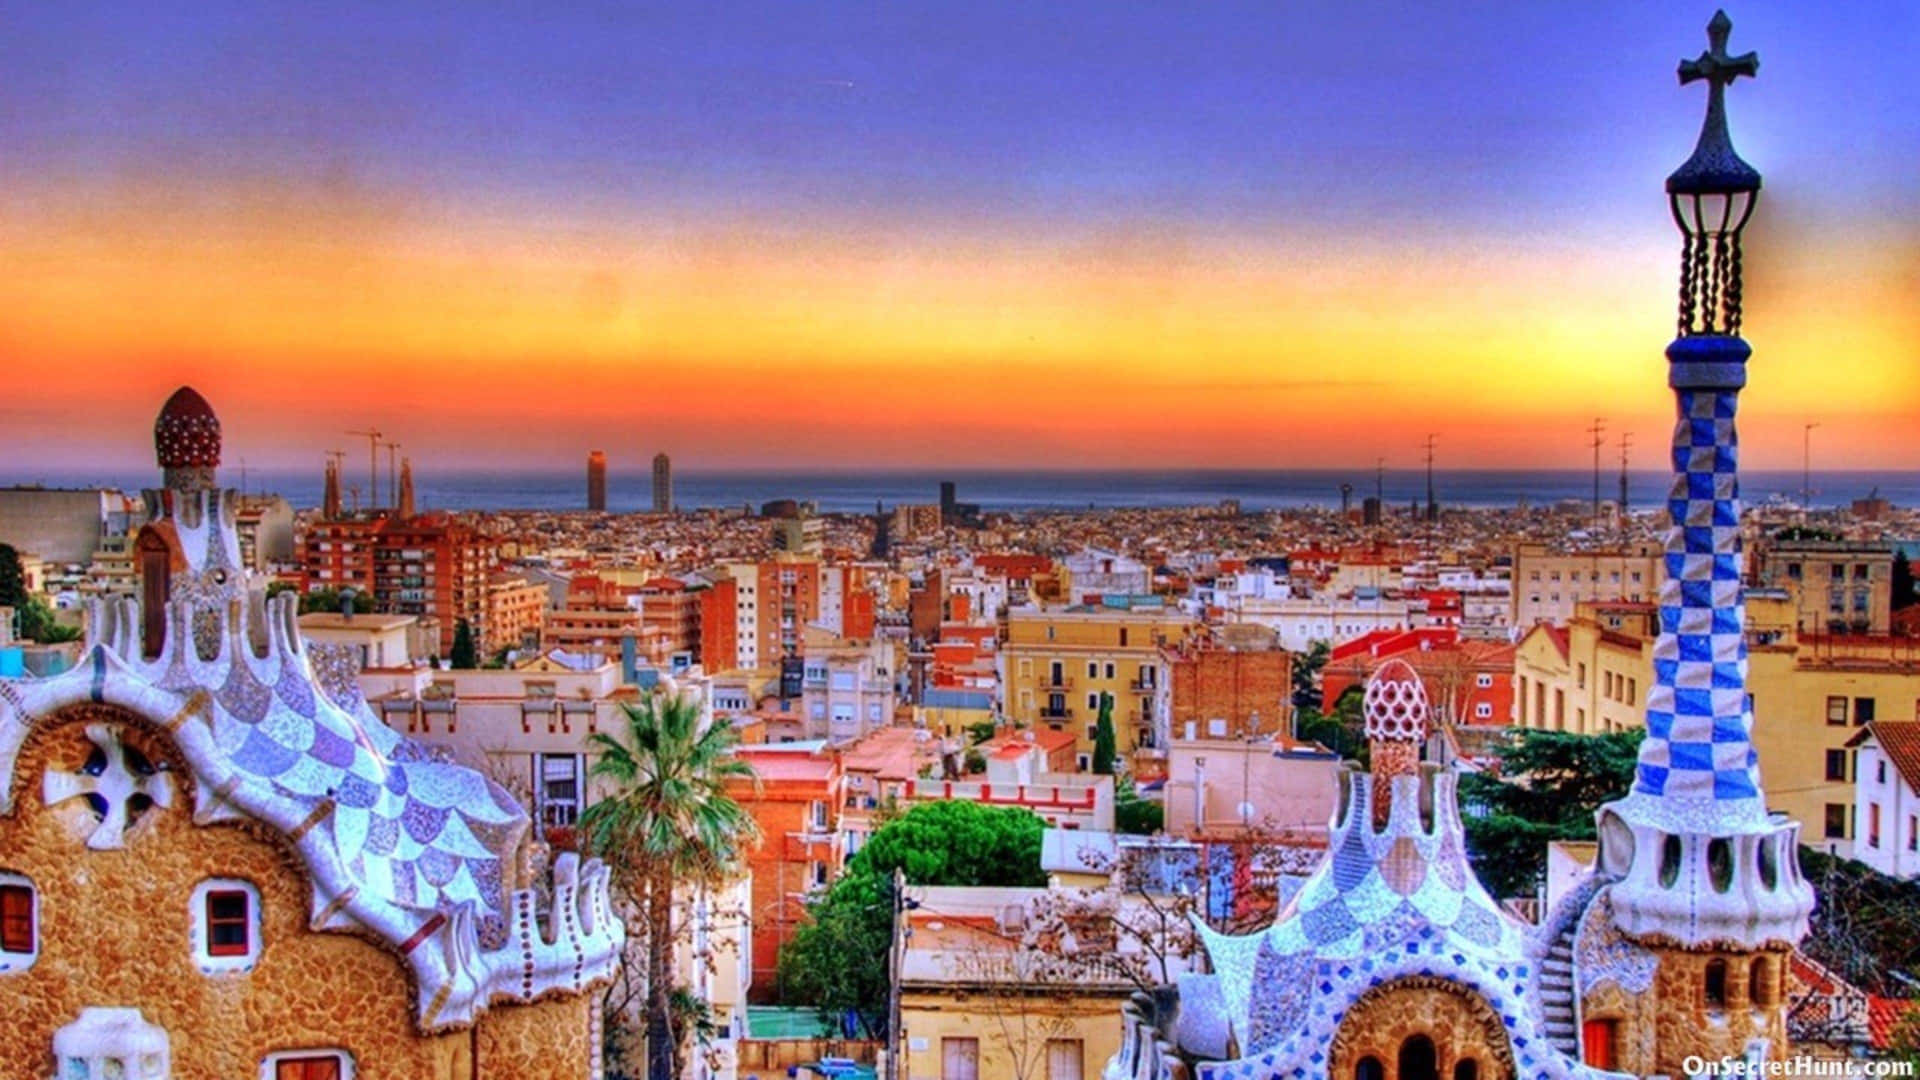 Barcelona, Spain At Sunset